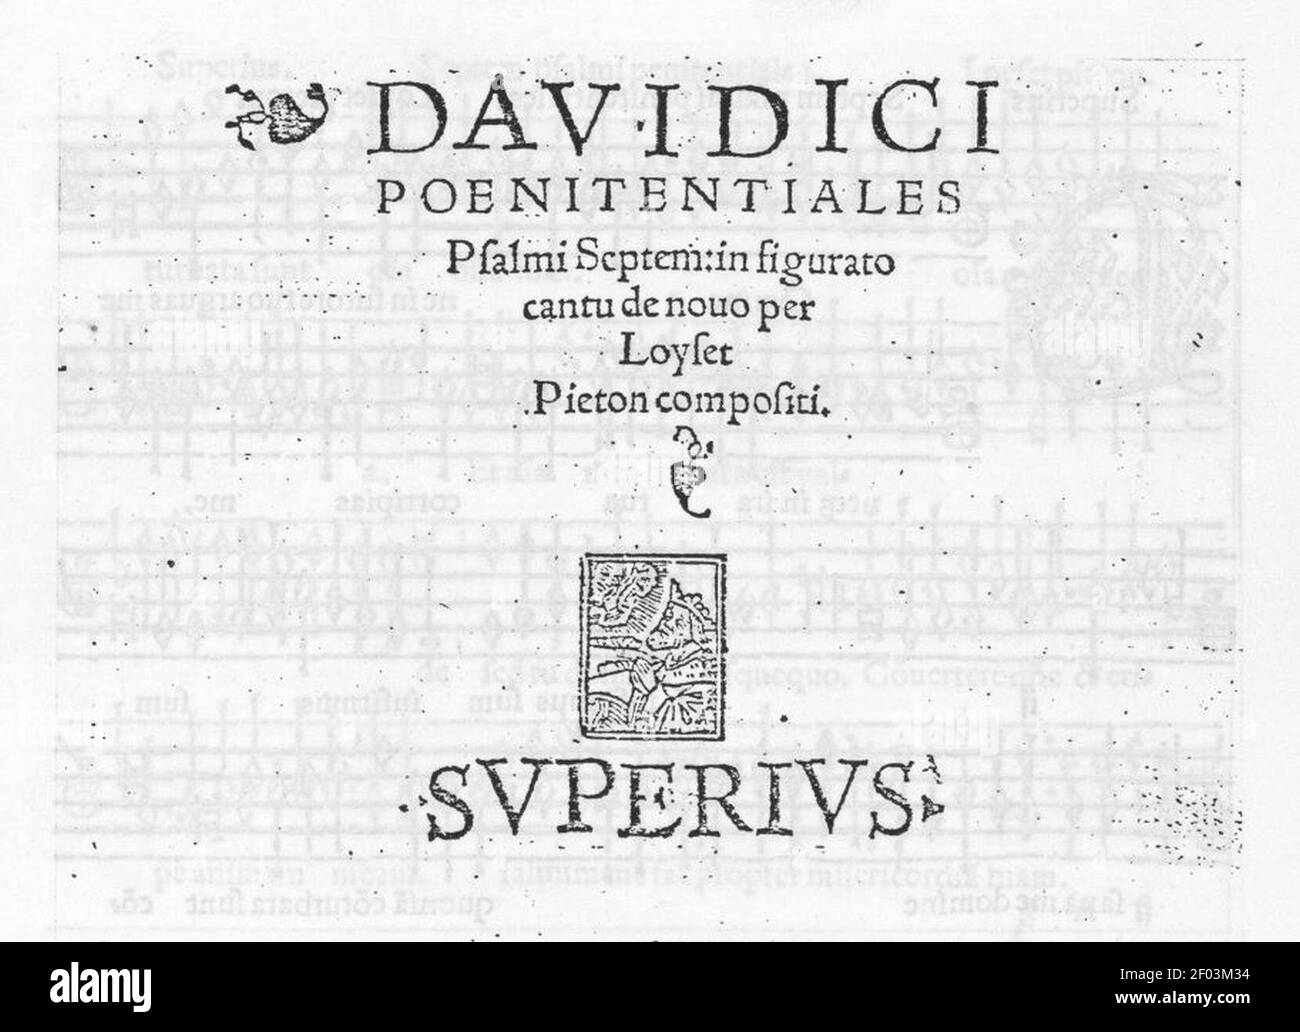 Pieton - Psalmi poenitentiali 1530. Stockfoto